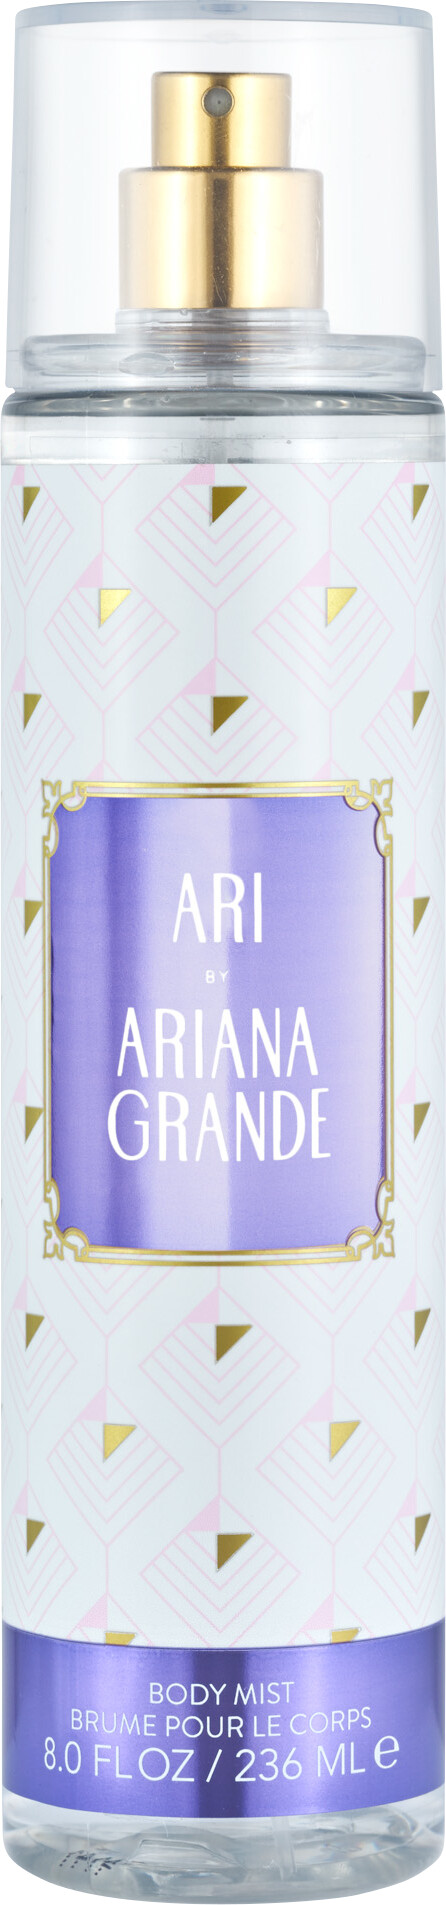 Ariana Grande Ari Body Mist 236ml